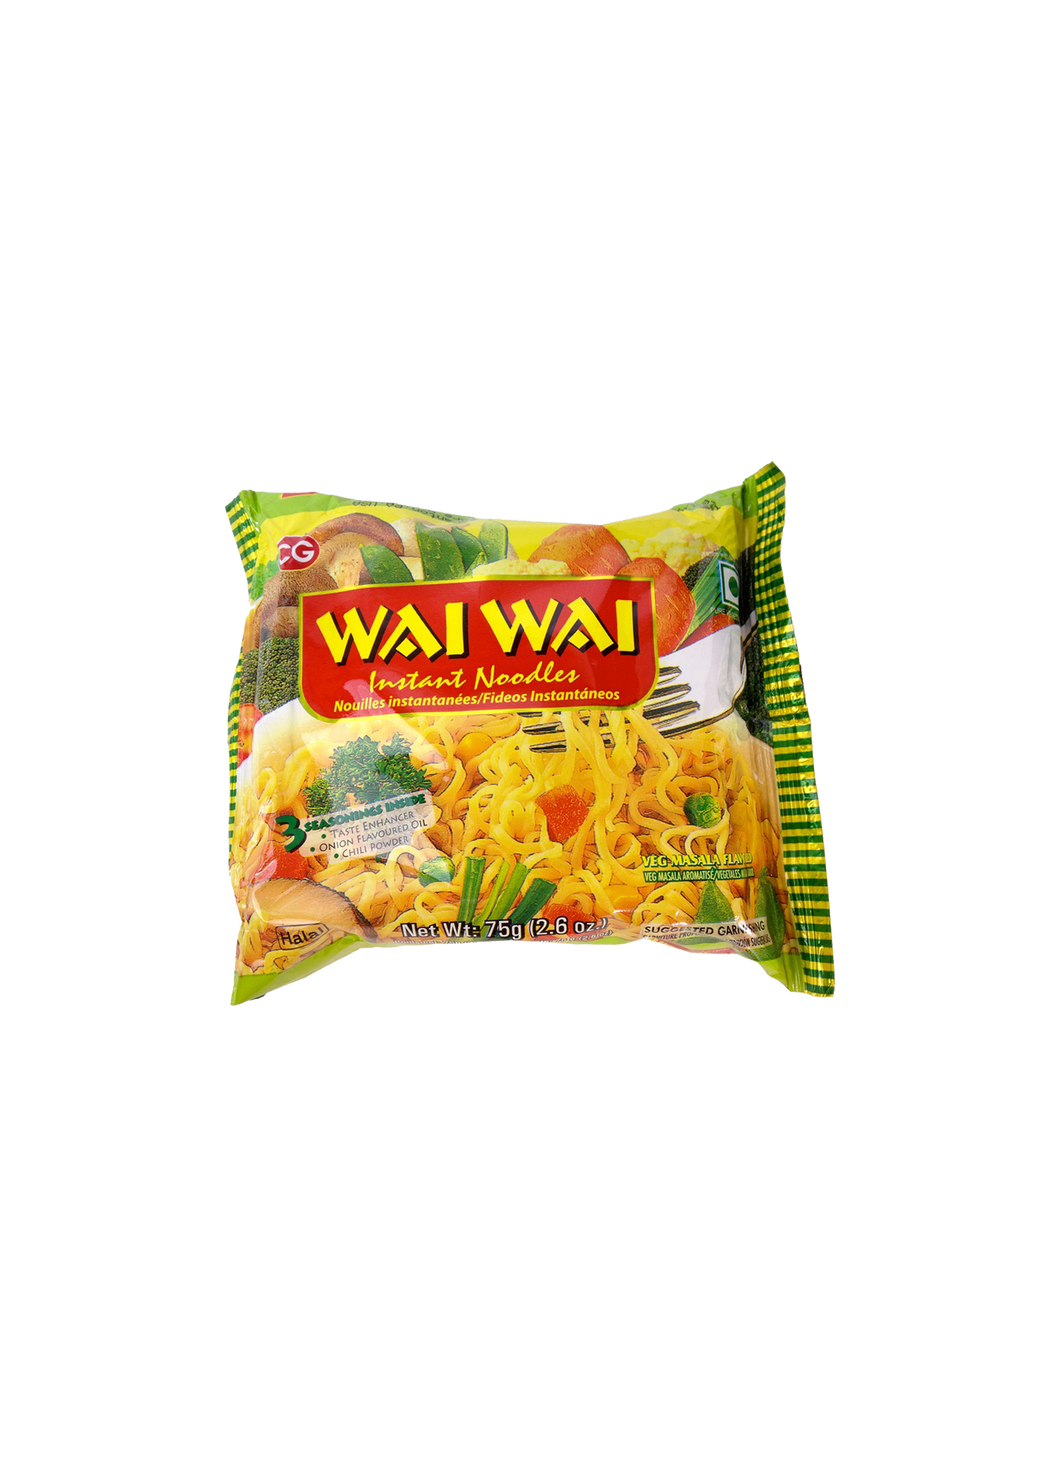 Wai Wai Instant Noodles Veg Masala Flavored 75g